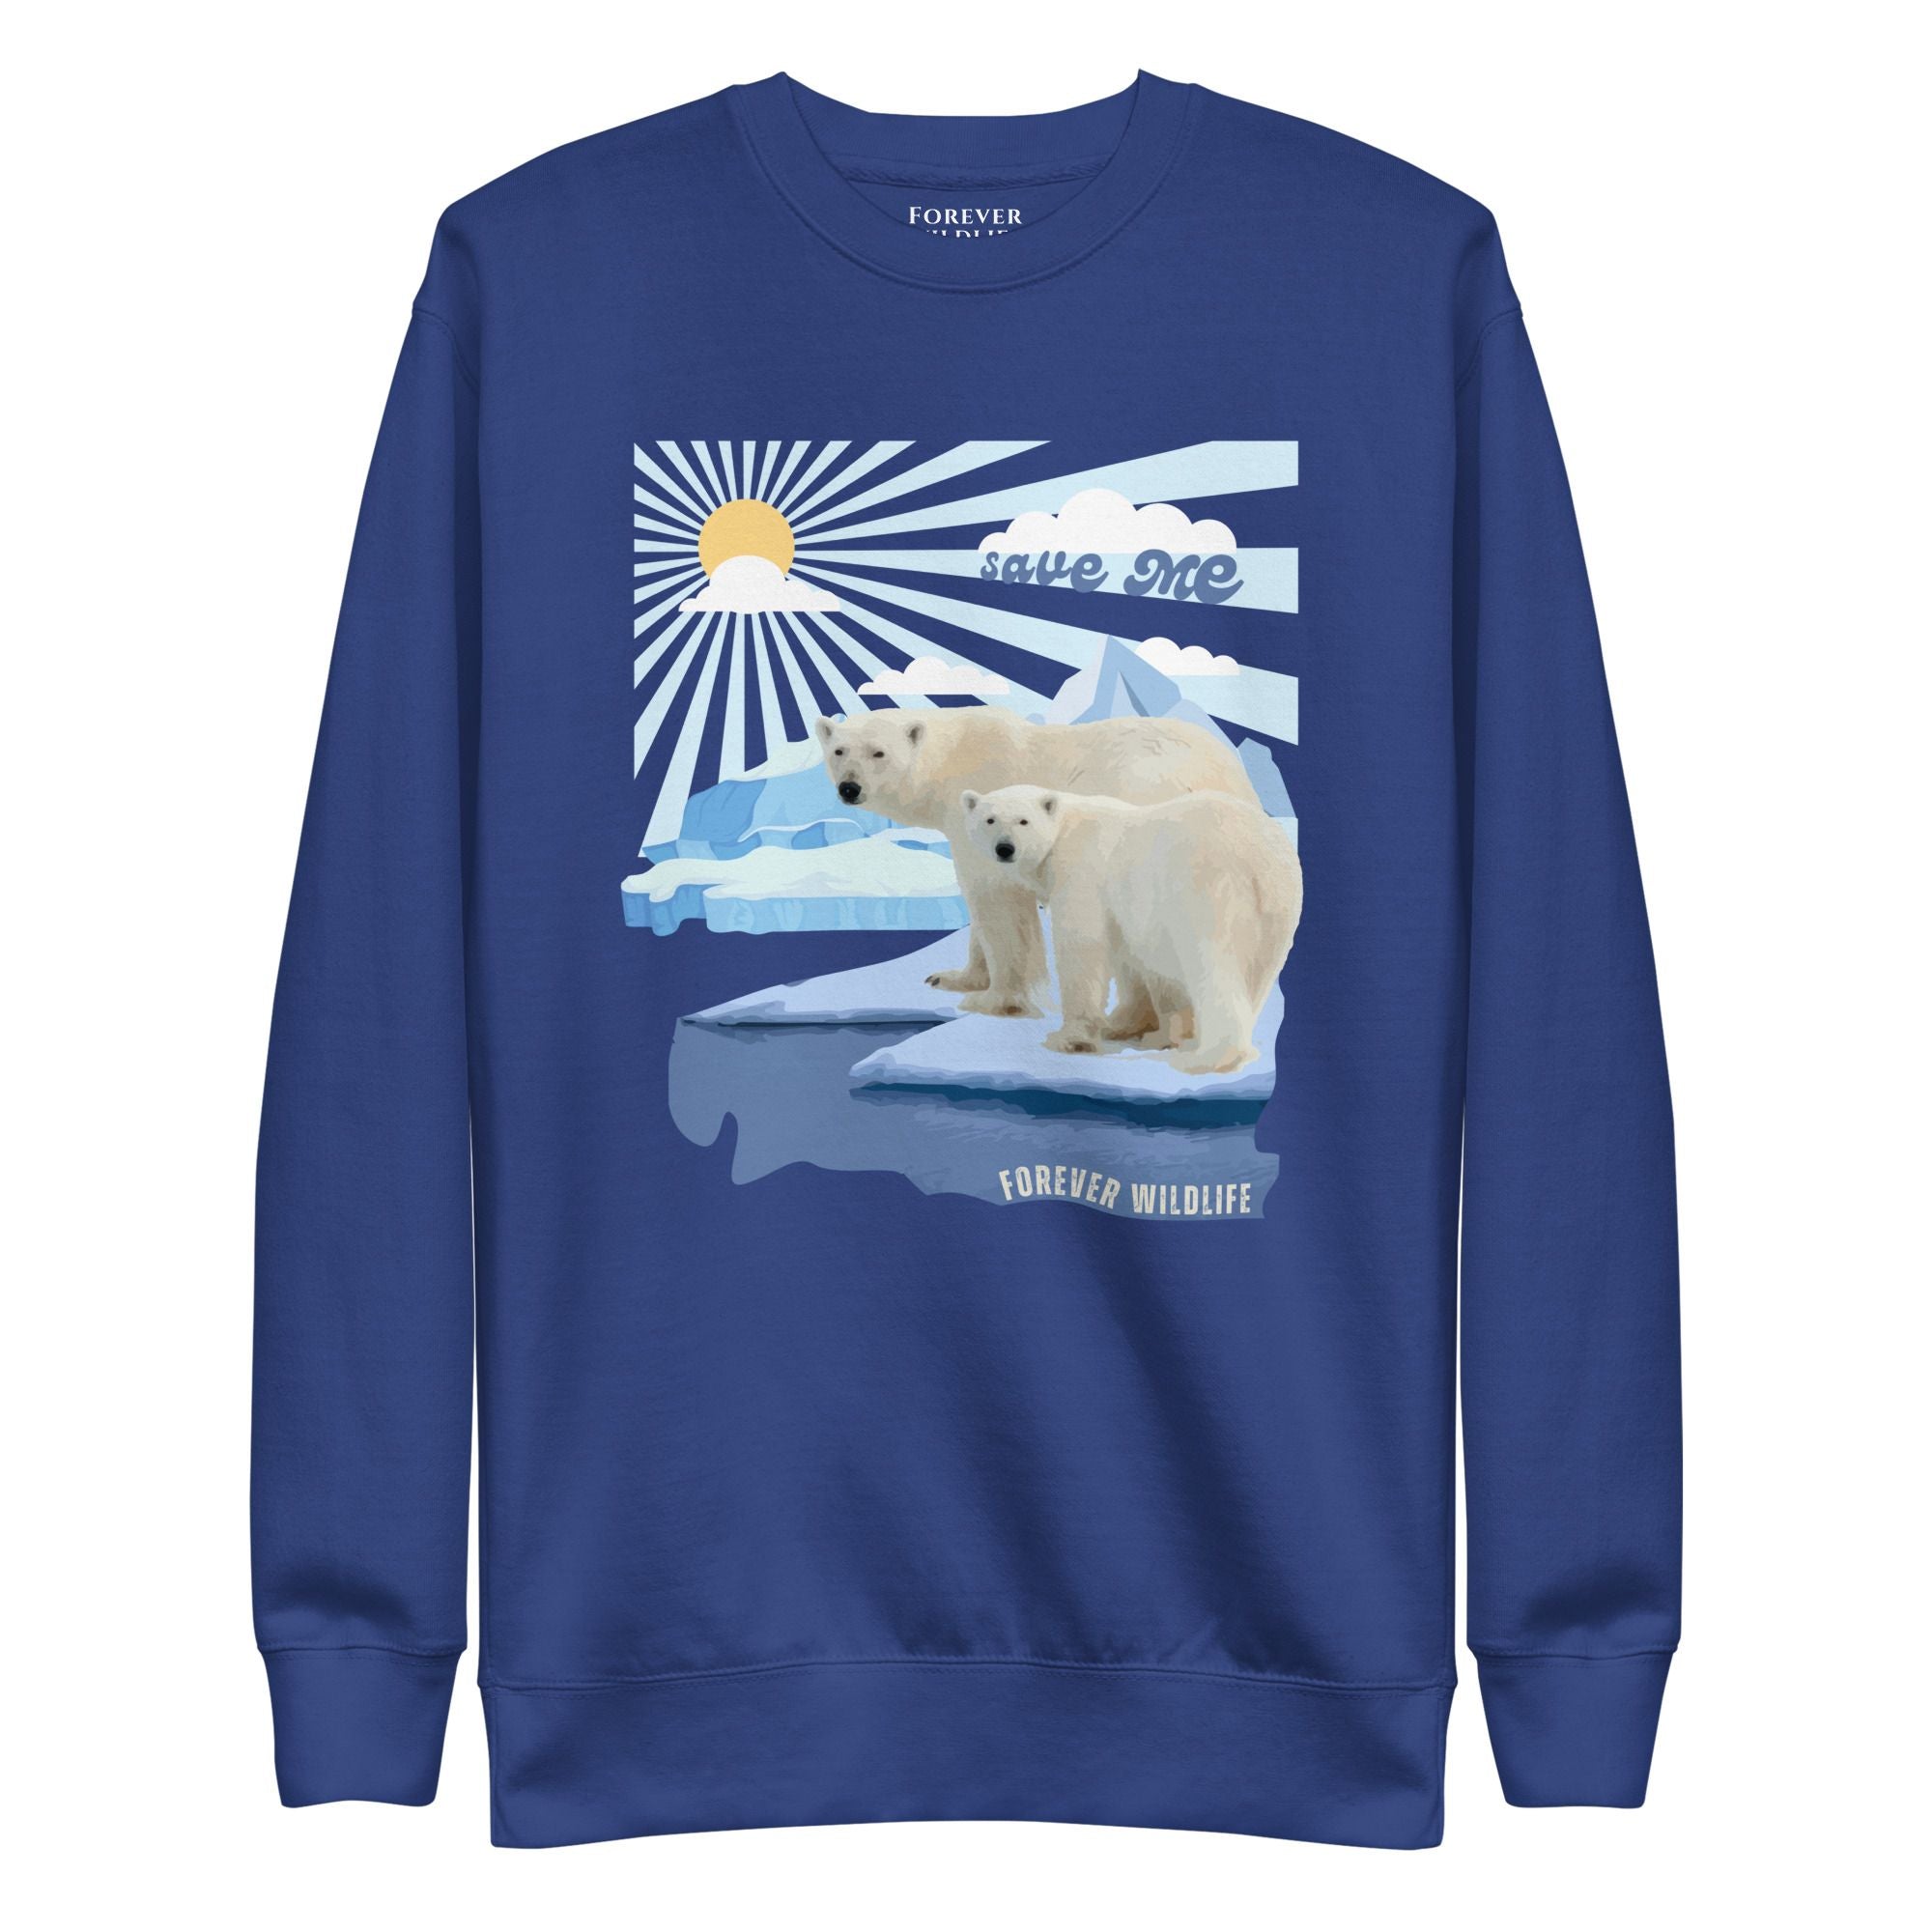  Polar Bears Sweatshirt in Royal-Premium Wildlife Animal Inspiration Sweatshirt Design with 'Save Me' text, part of Wildlife Sweatshirts & Clothing from Forever Wildlife.